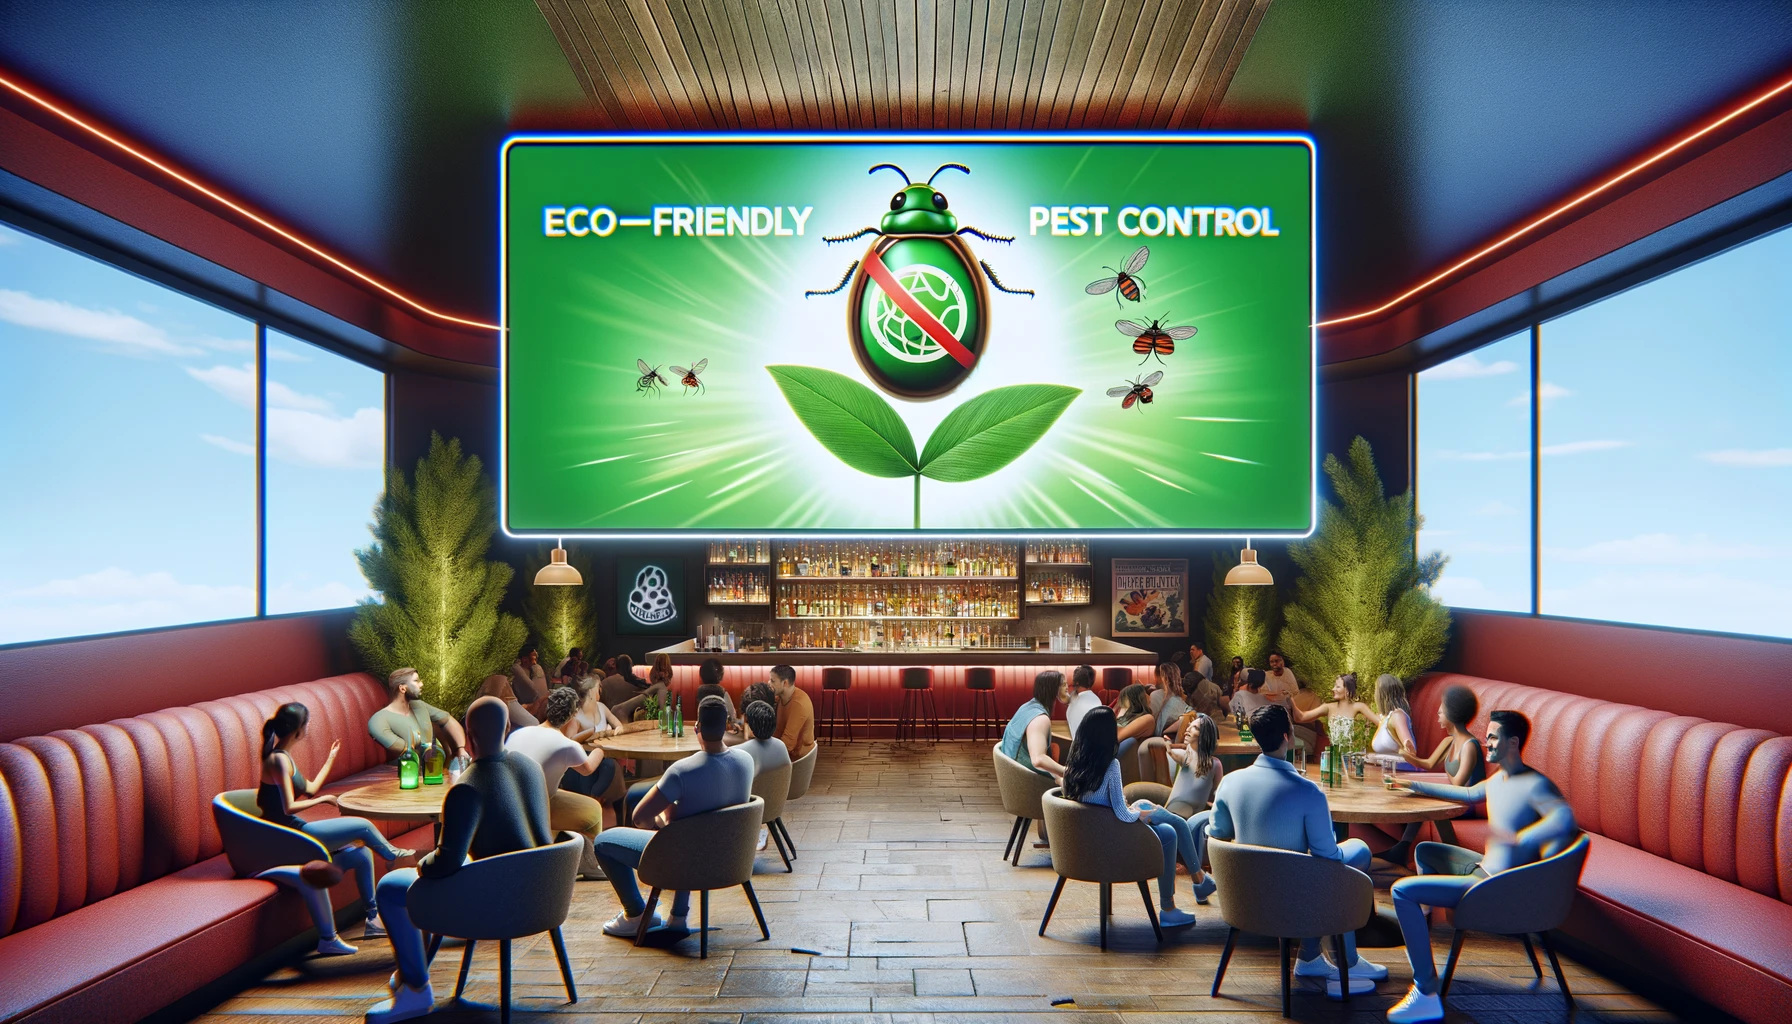 Pest control advertising ideas